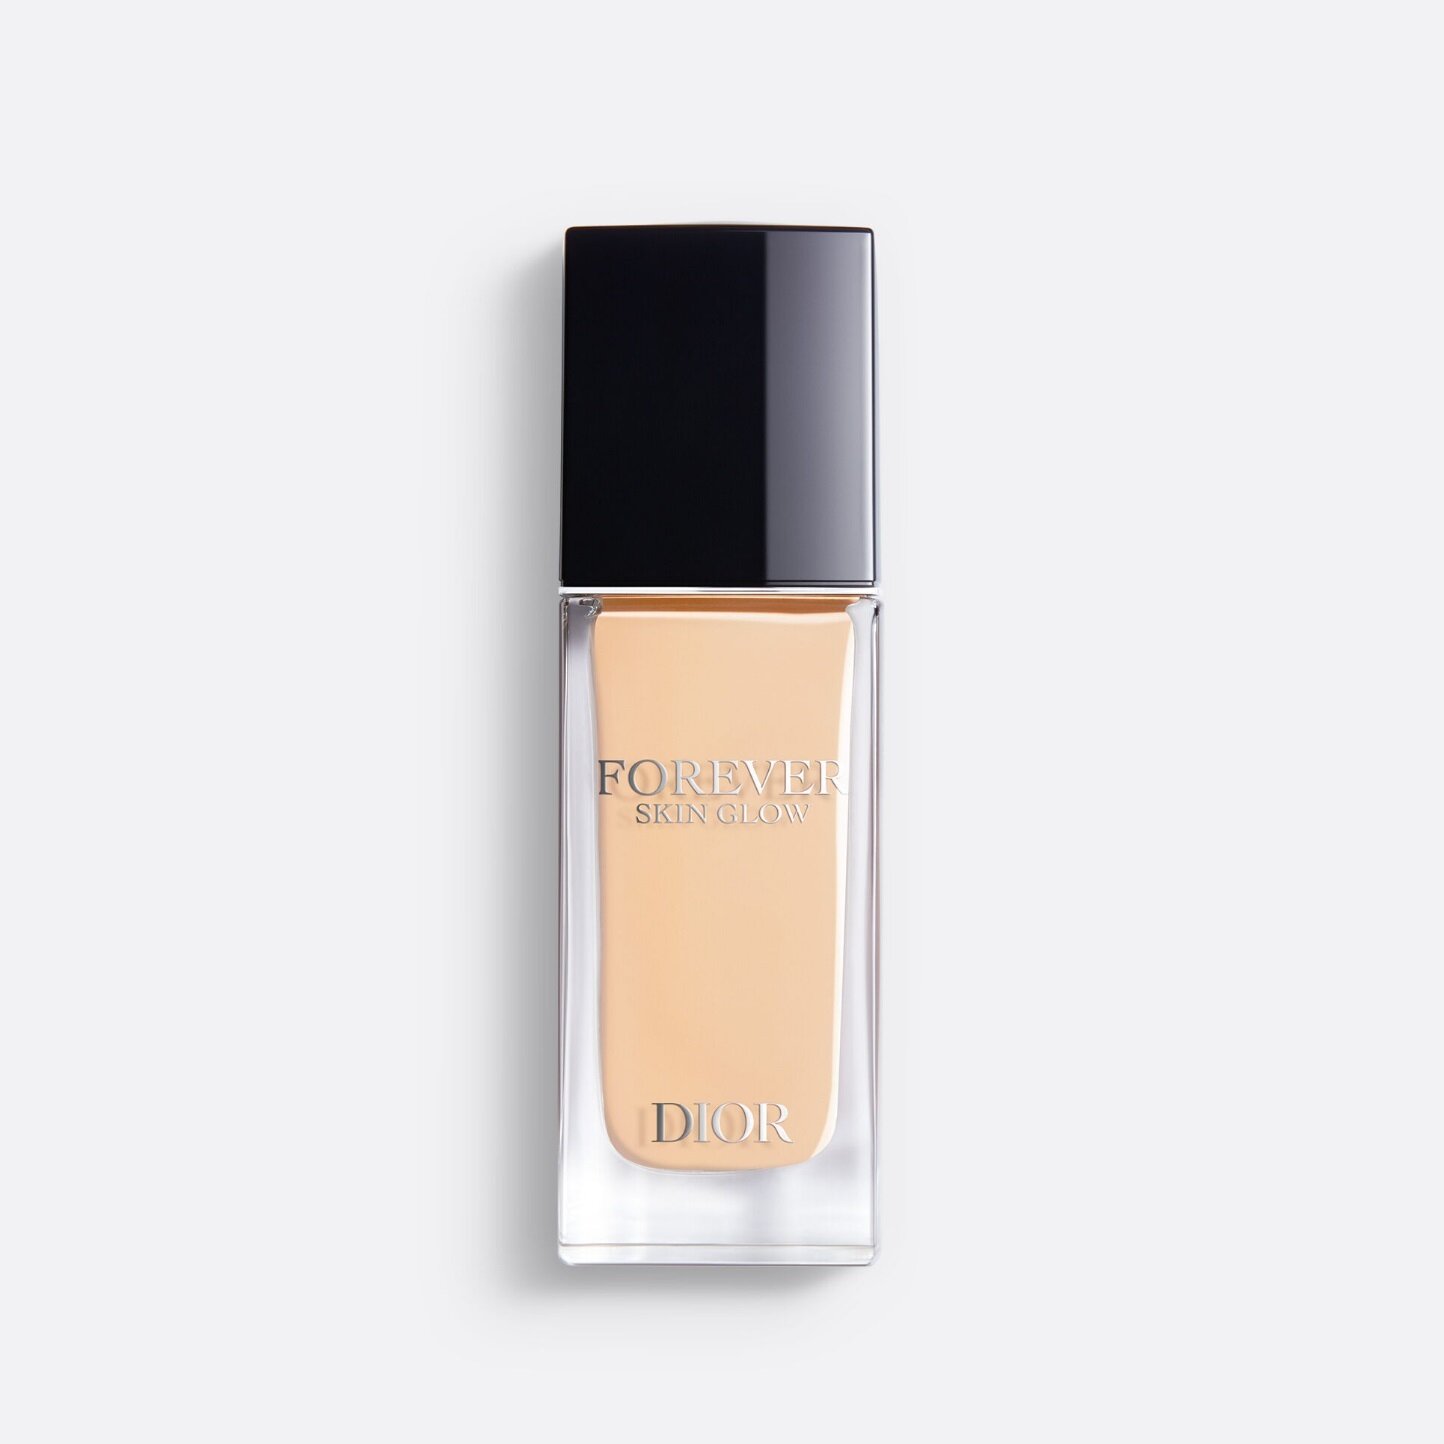 Dior Тональный крем Forever Skin Glow, SPF 35, 30 мл, оттенок: 2WP Warm Peach